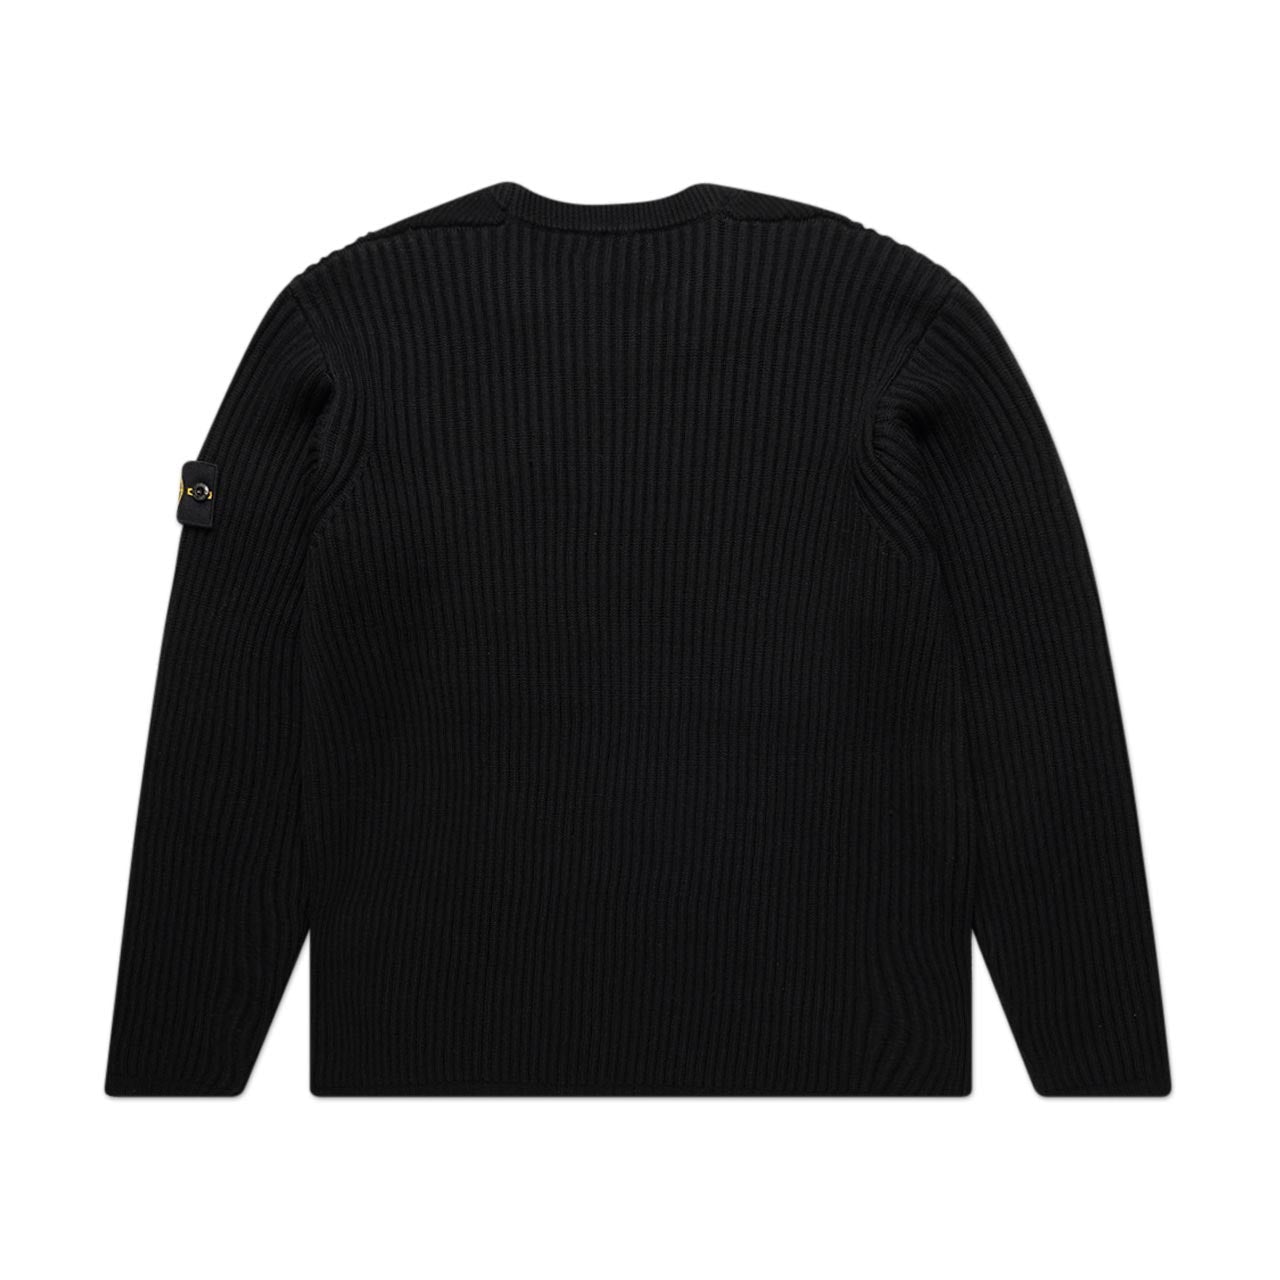 stone island stone island ribbed knit sweater (black)